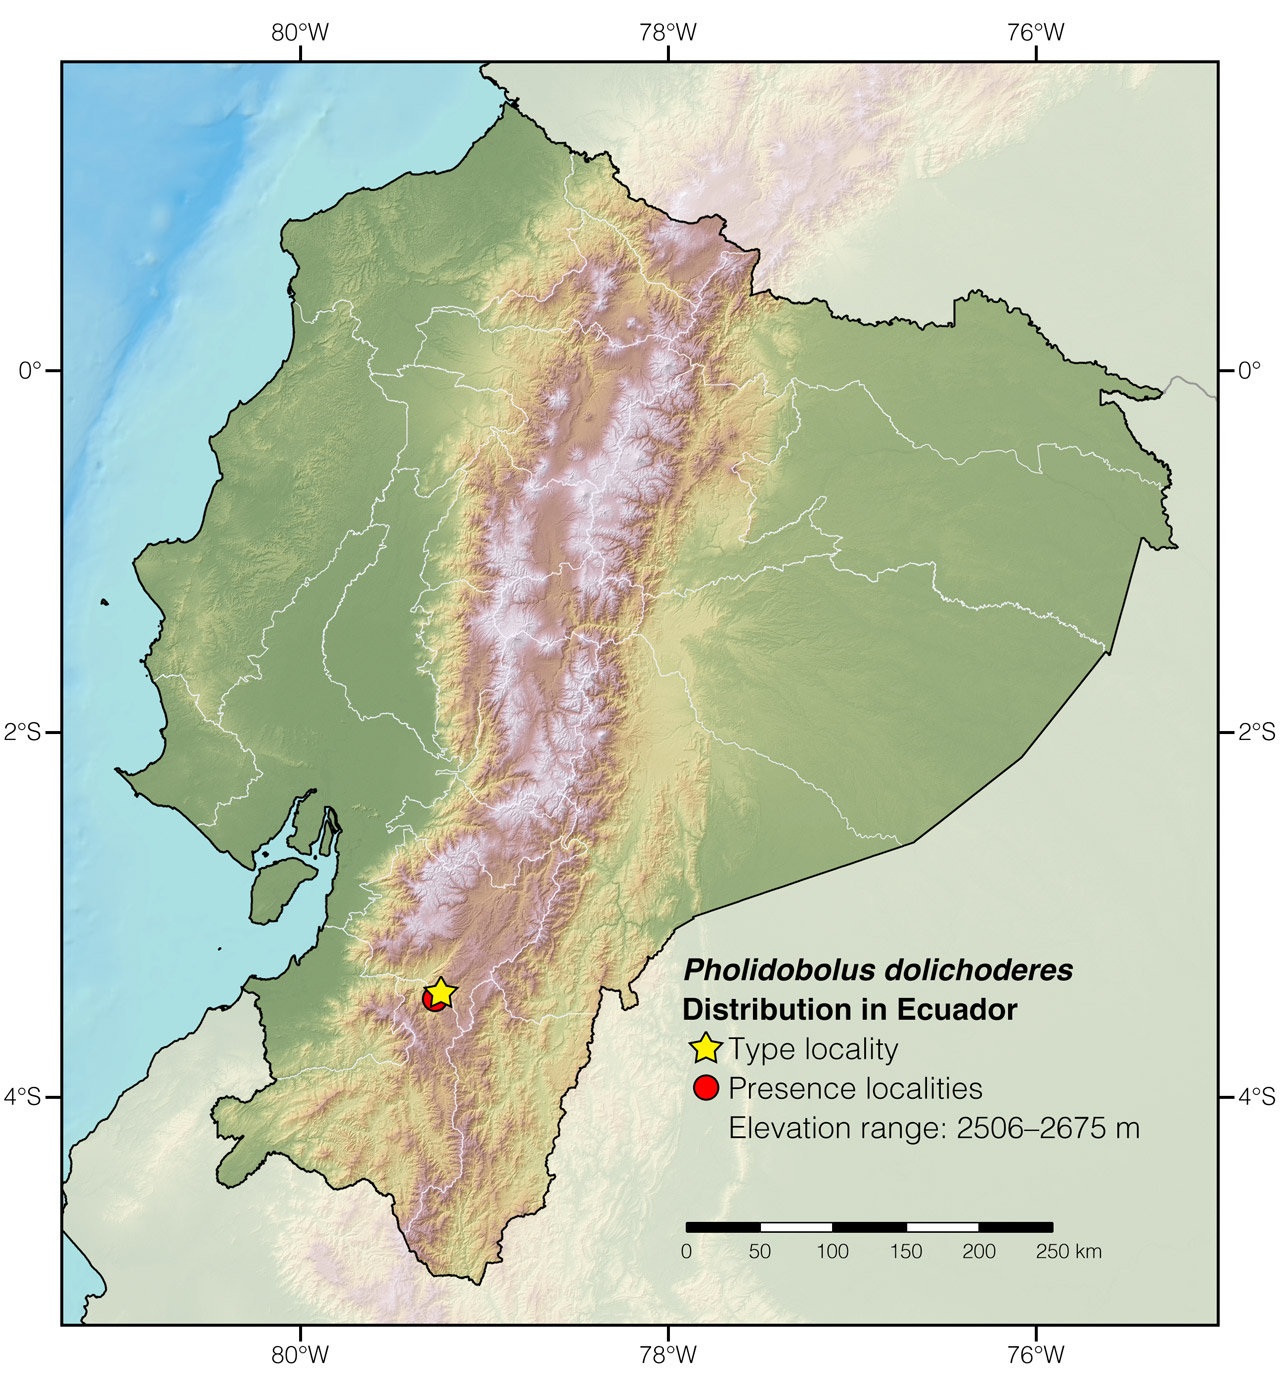 Distribution of Pholidobolus dolichoderes in Ecuador